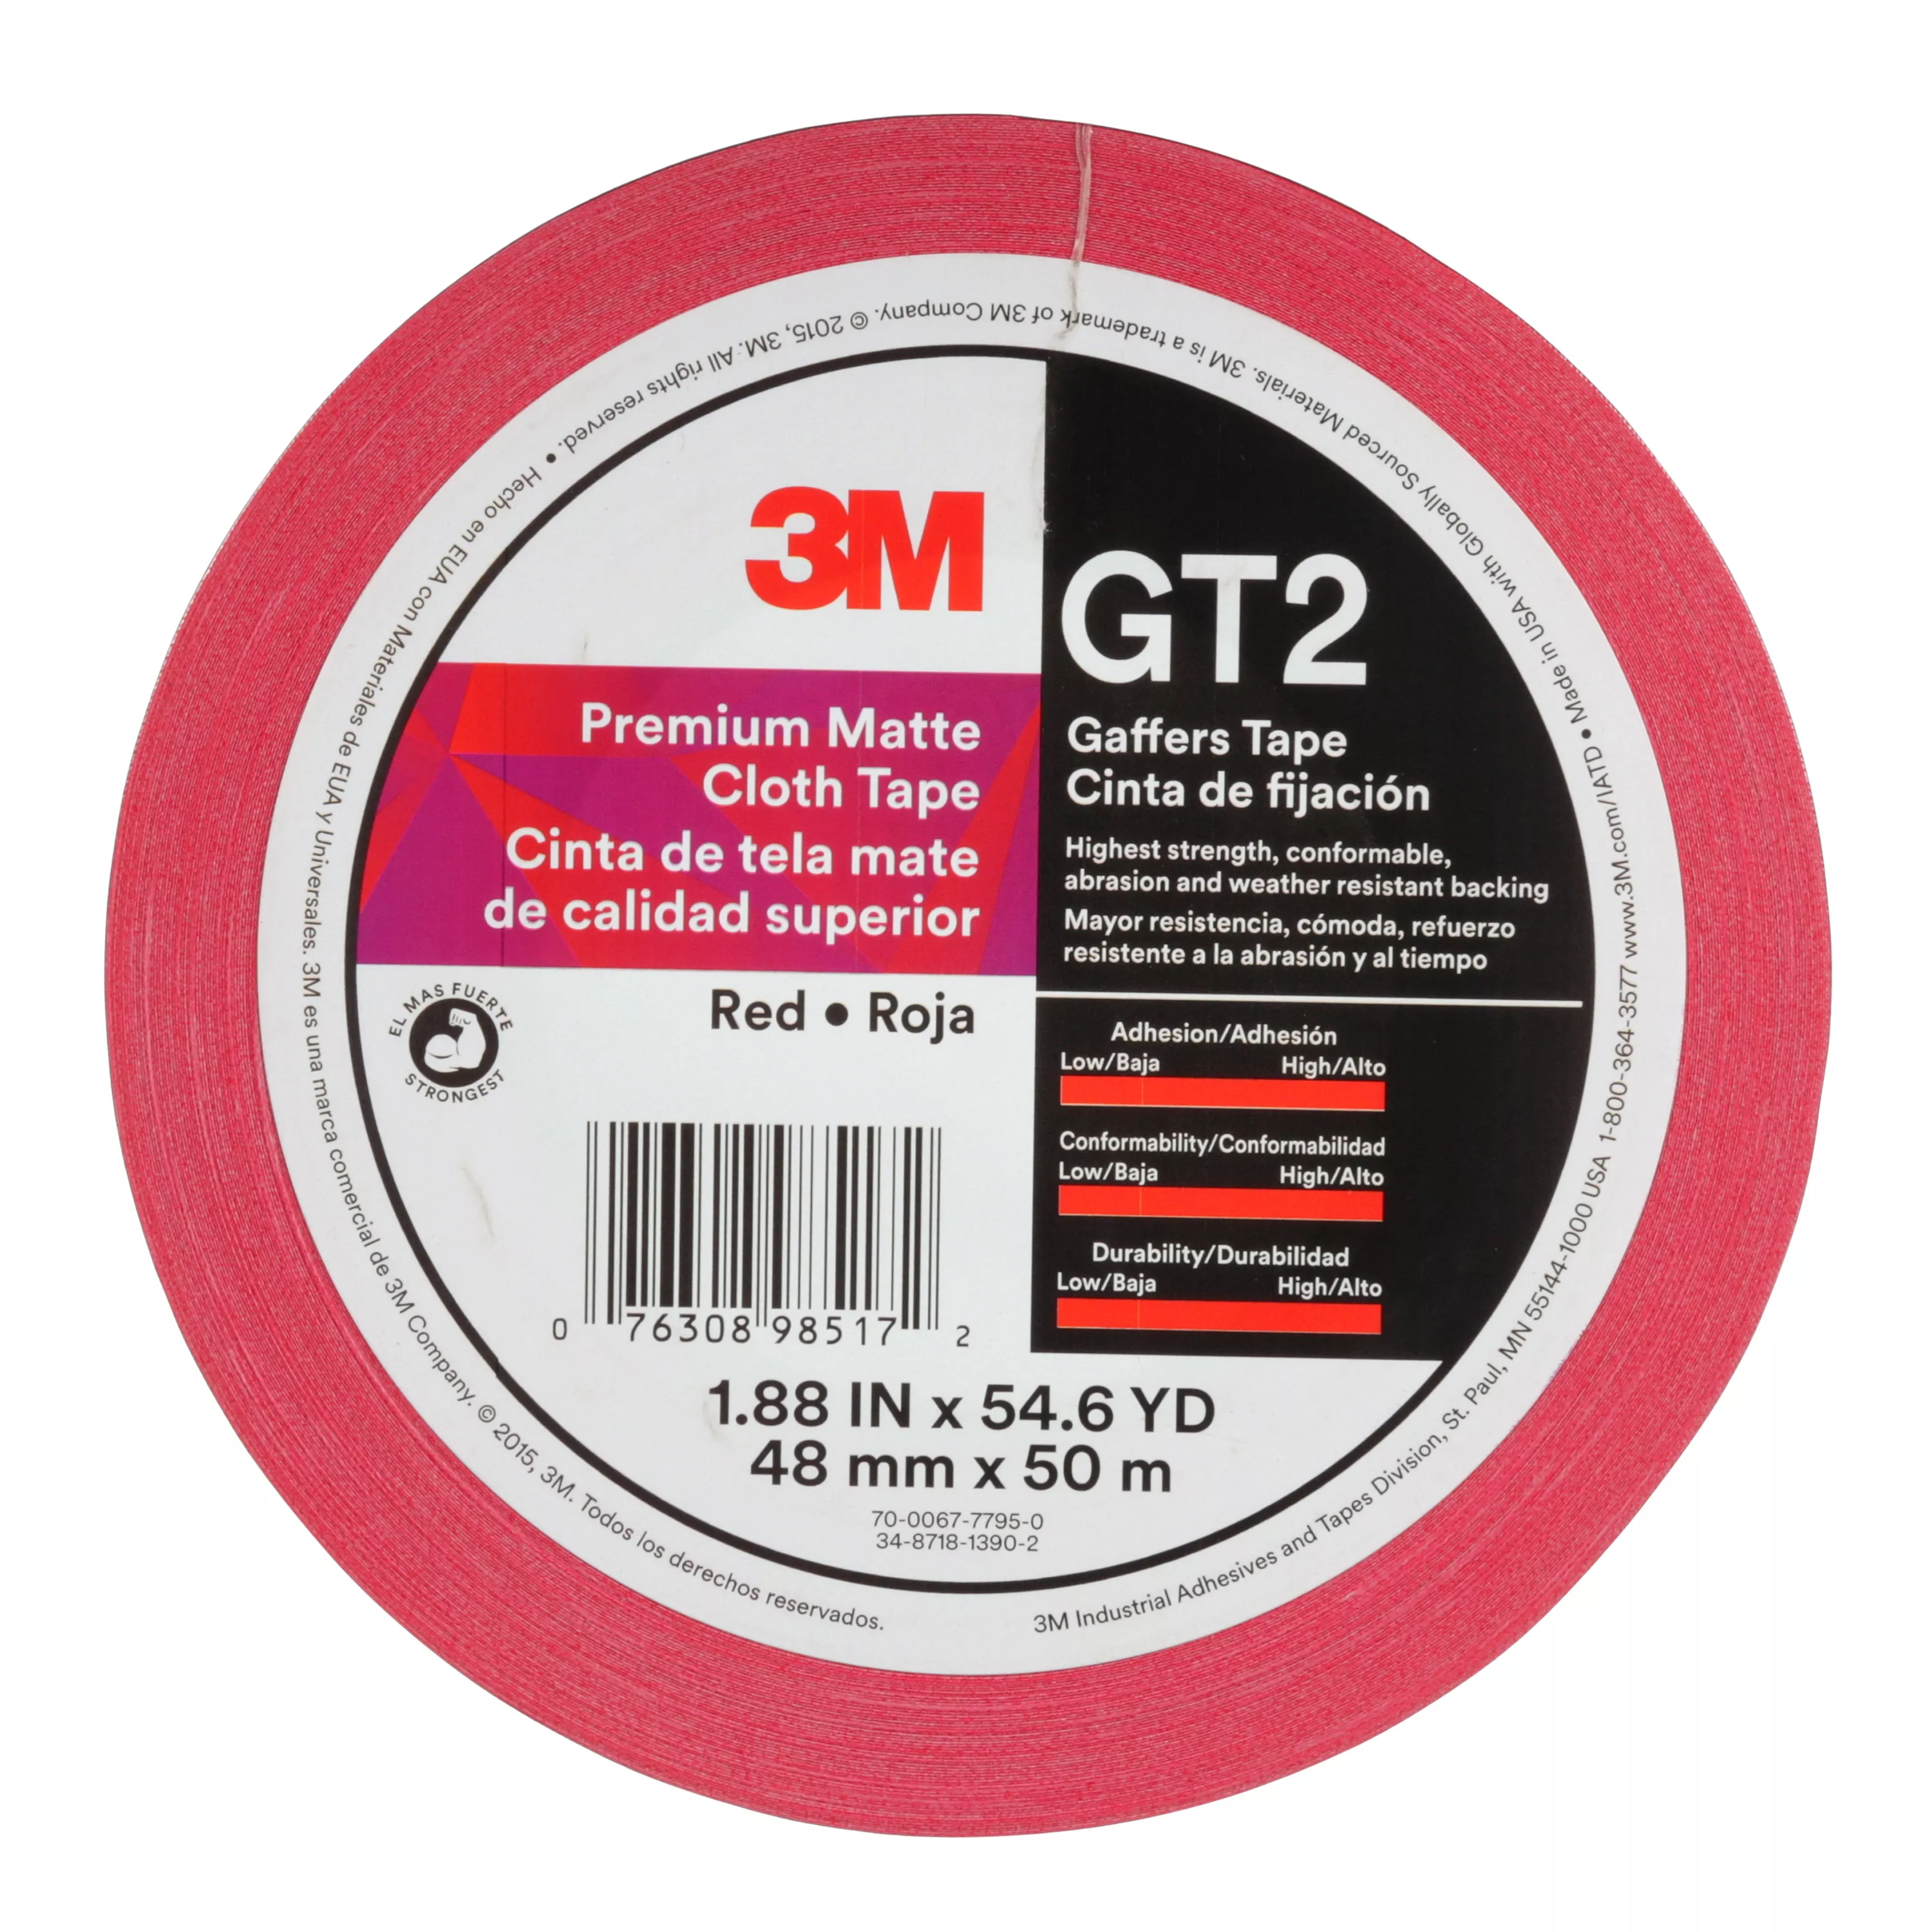 SKU 7010375516 | 3M™ Premium Matte Cloth (Gaffers) Tape GT2